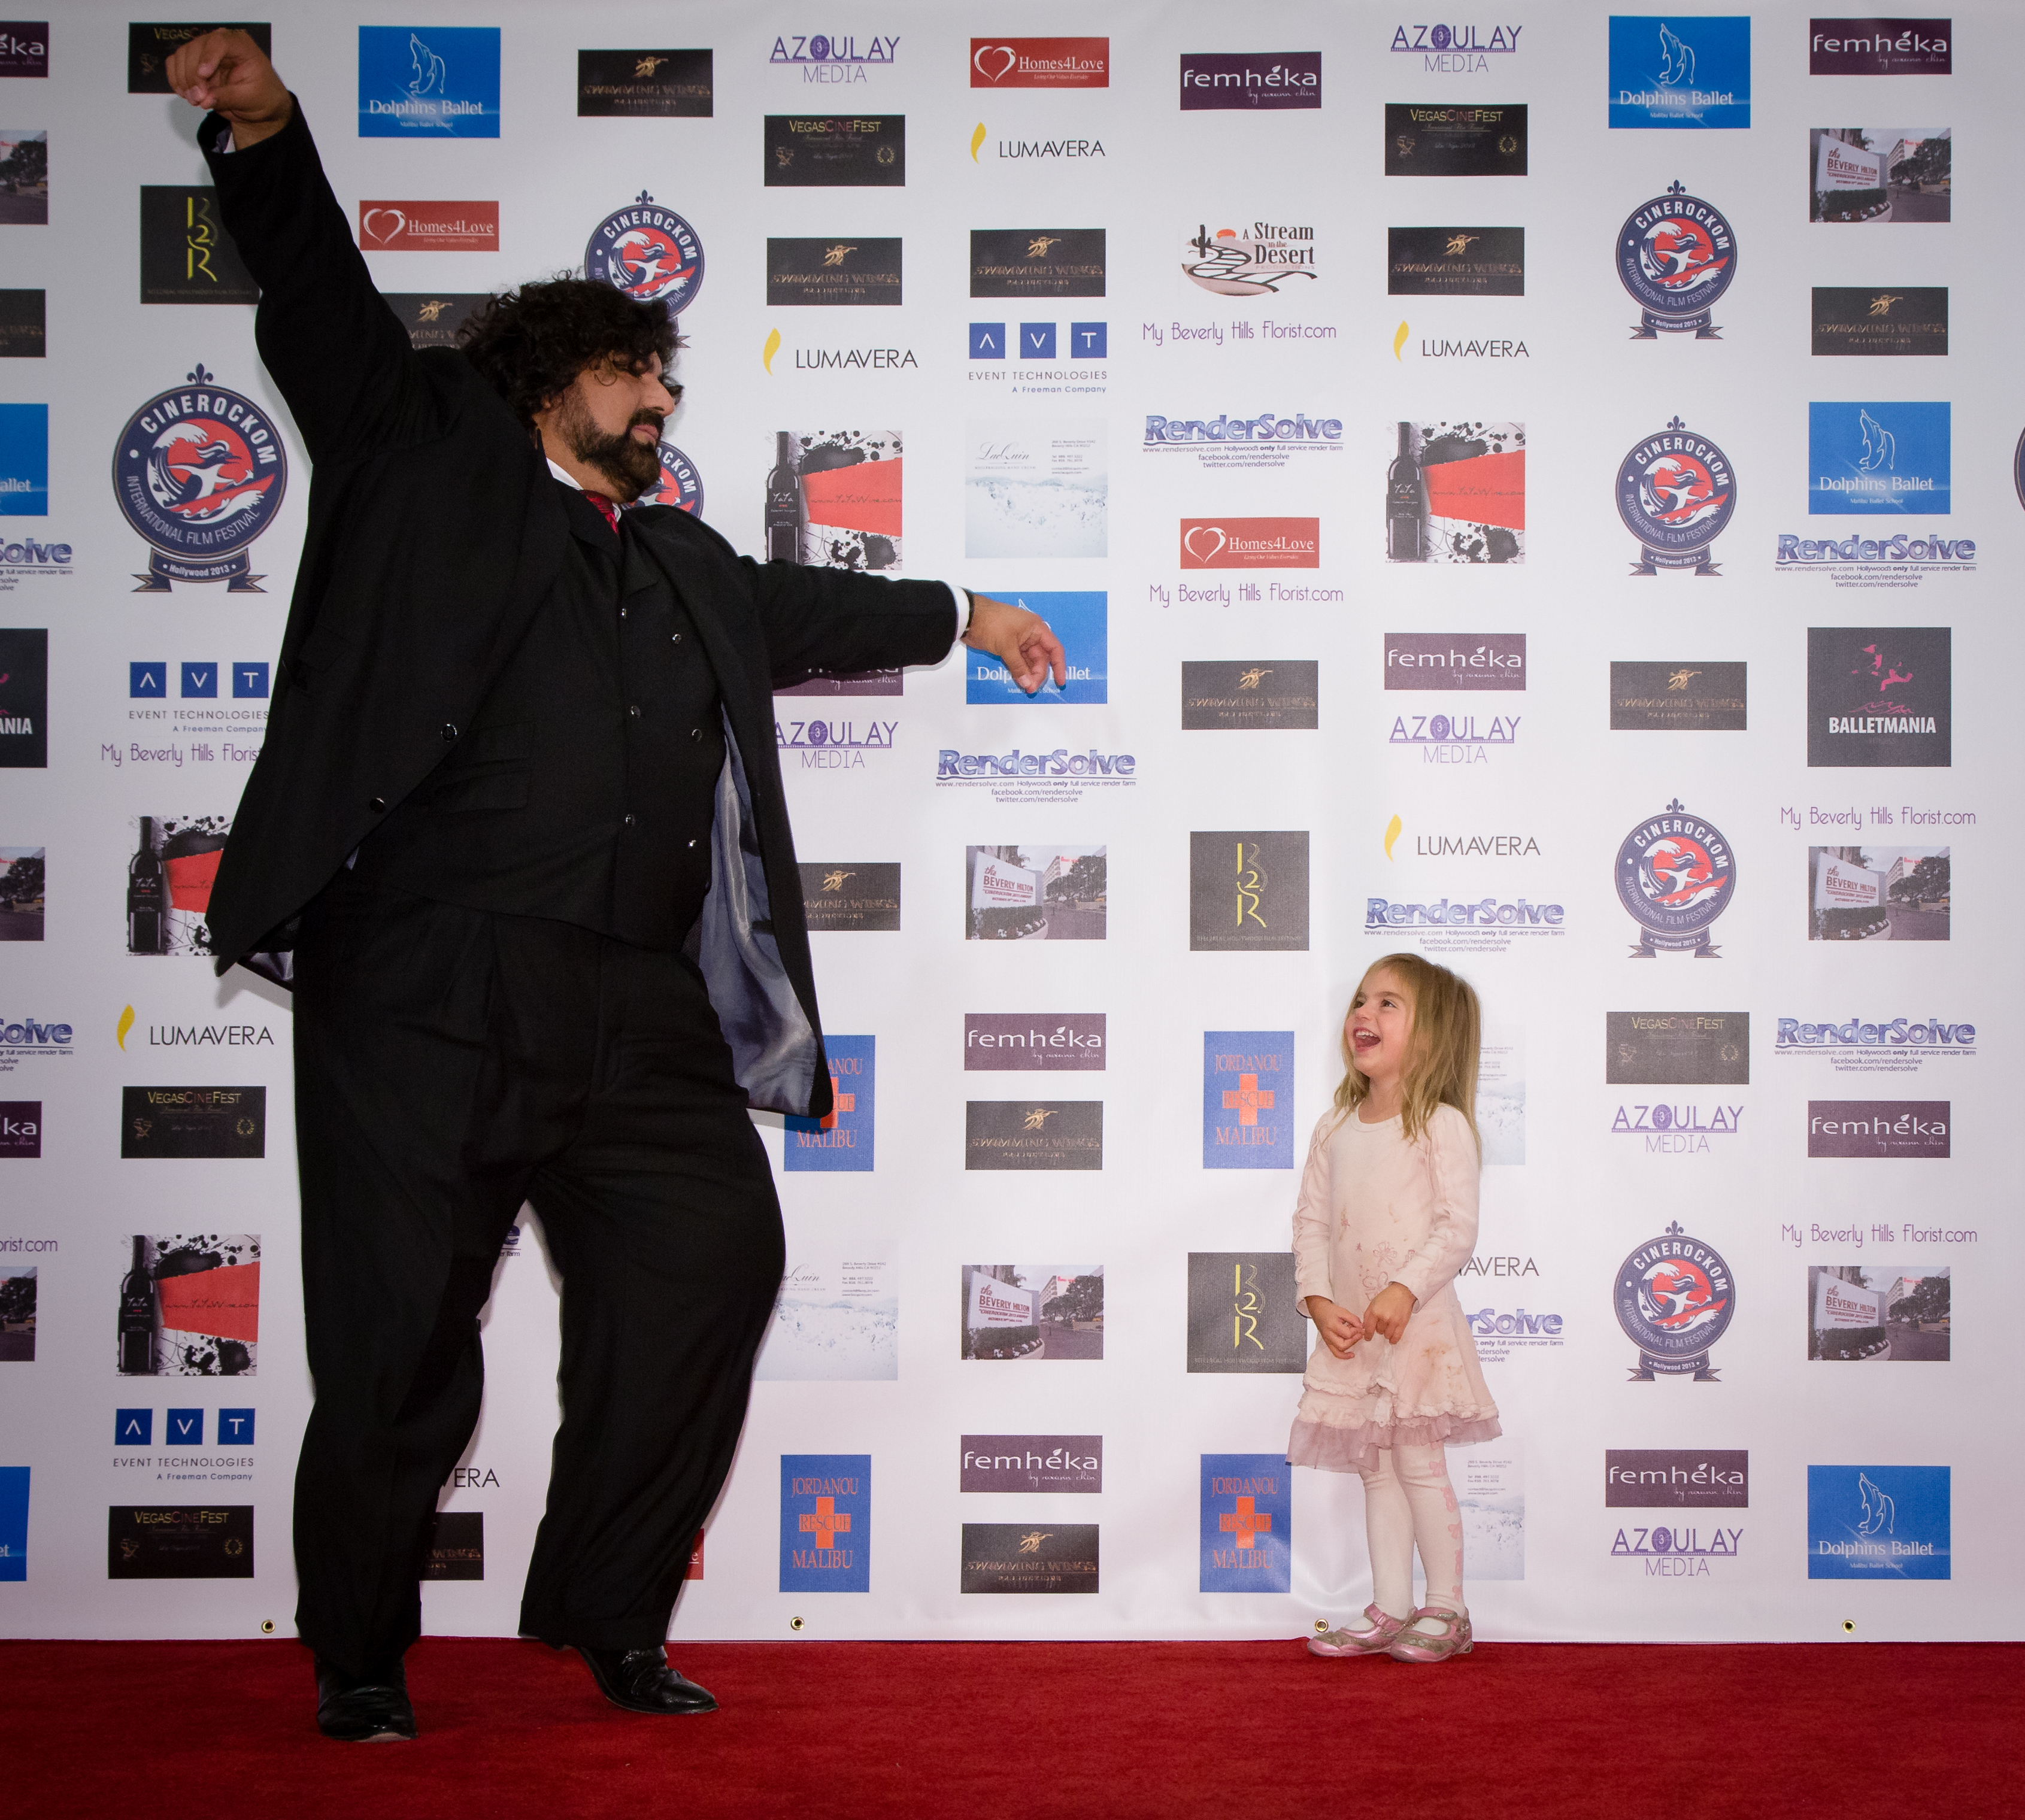 Cinerockom 2013 Hollywood Red Carpet. Beverly Hilton Hotel. Gabriel Schmidt with daughter Victoria Schmidt for their movie premiere